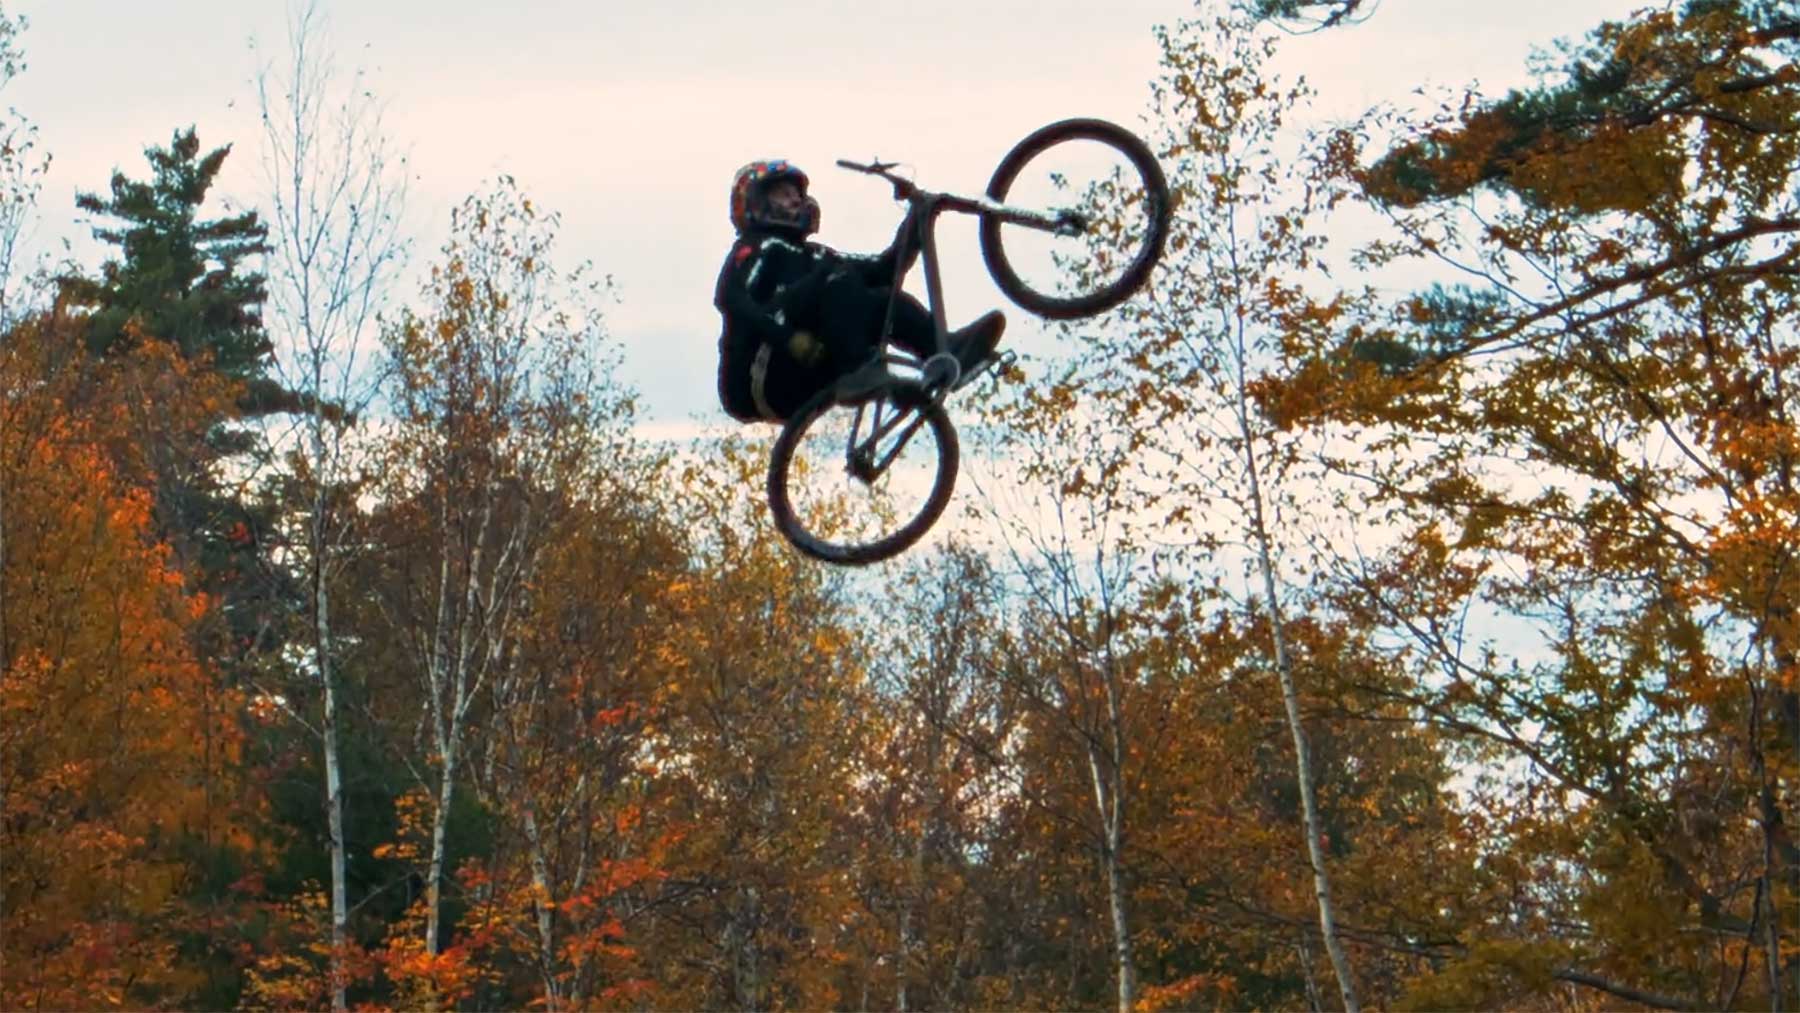 Mountainbike-Video mit Nicholi Rogatkin: „Fall Harvest“